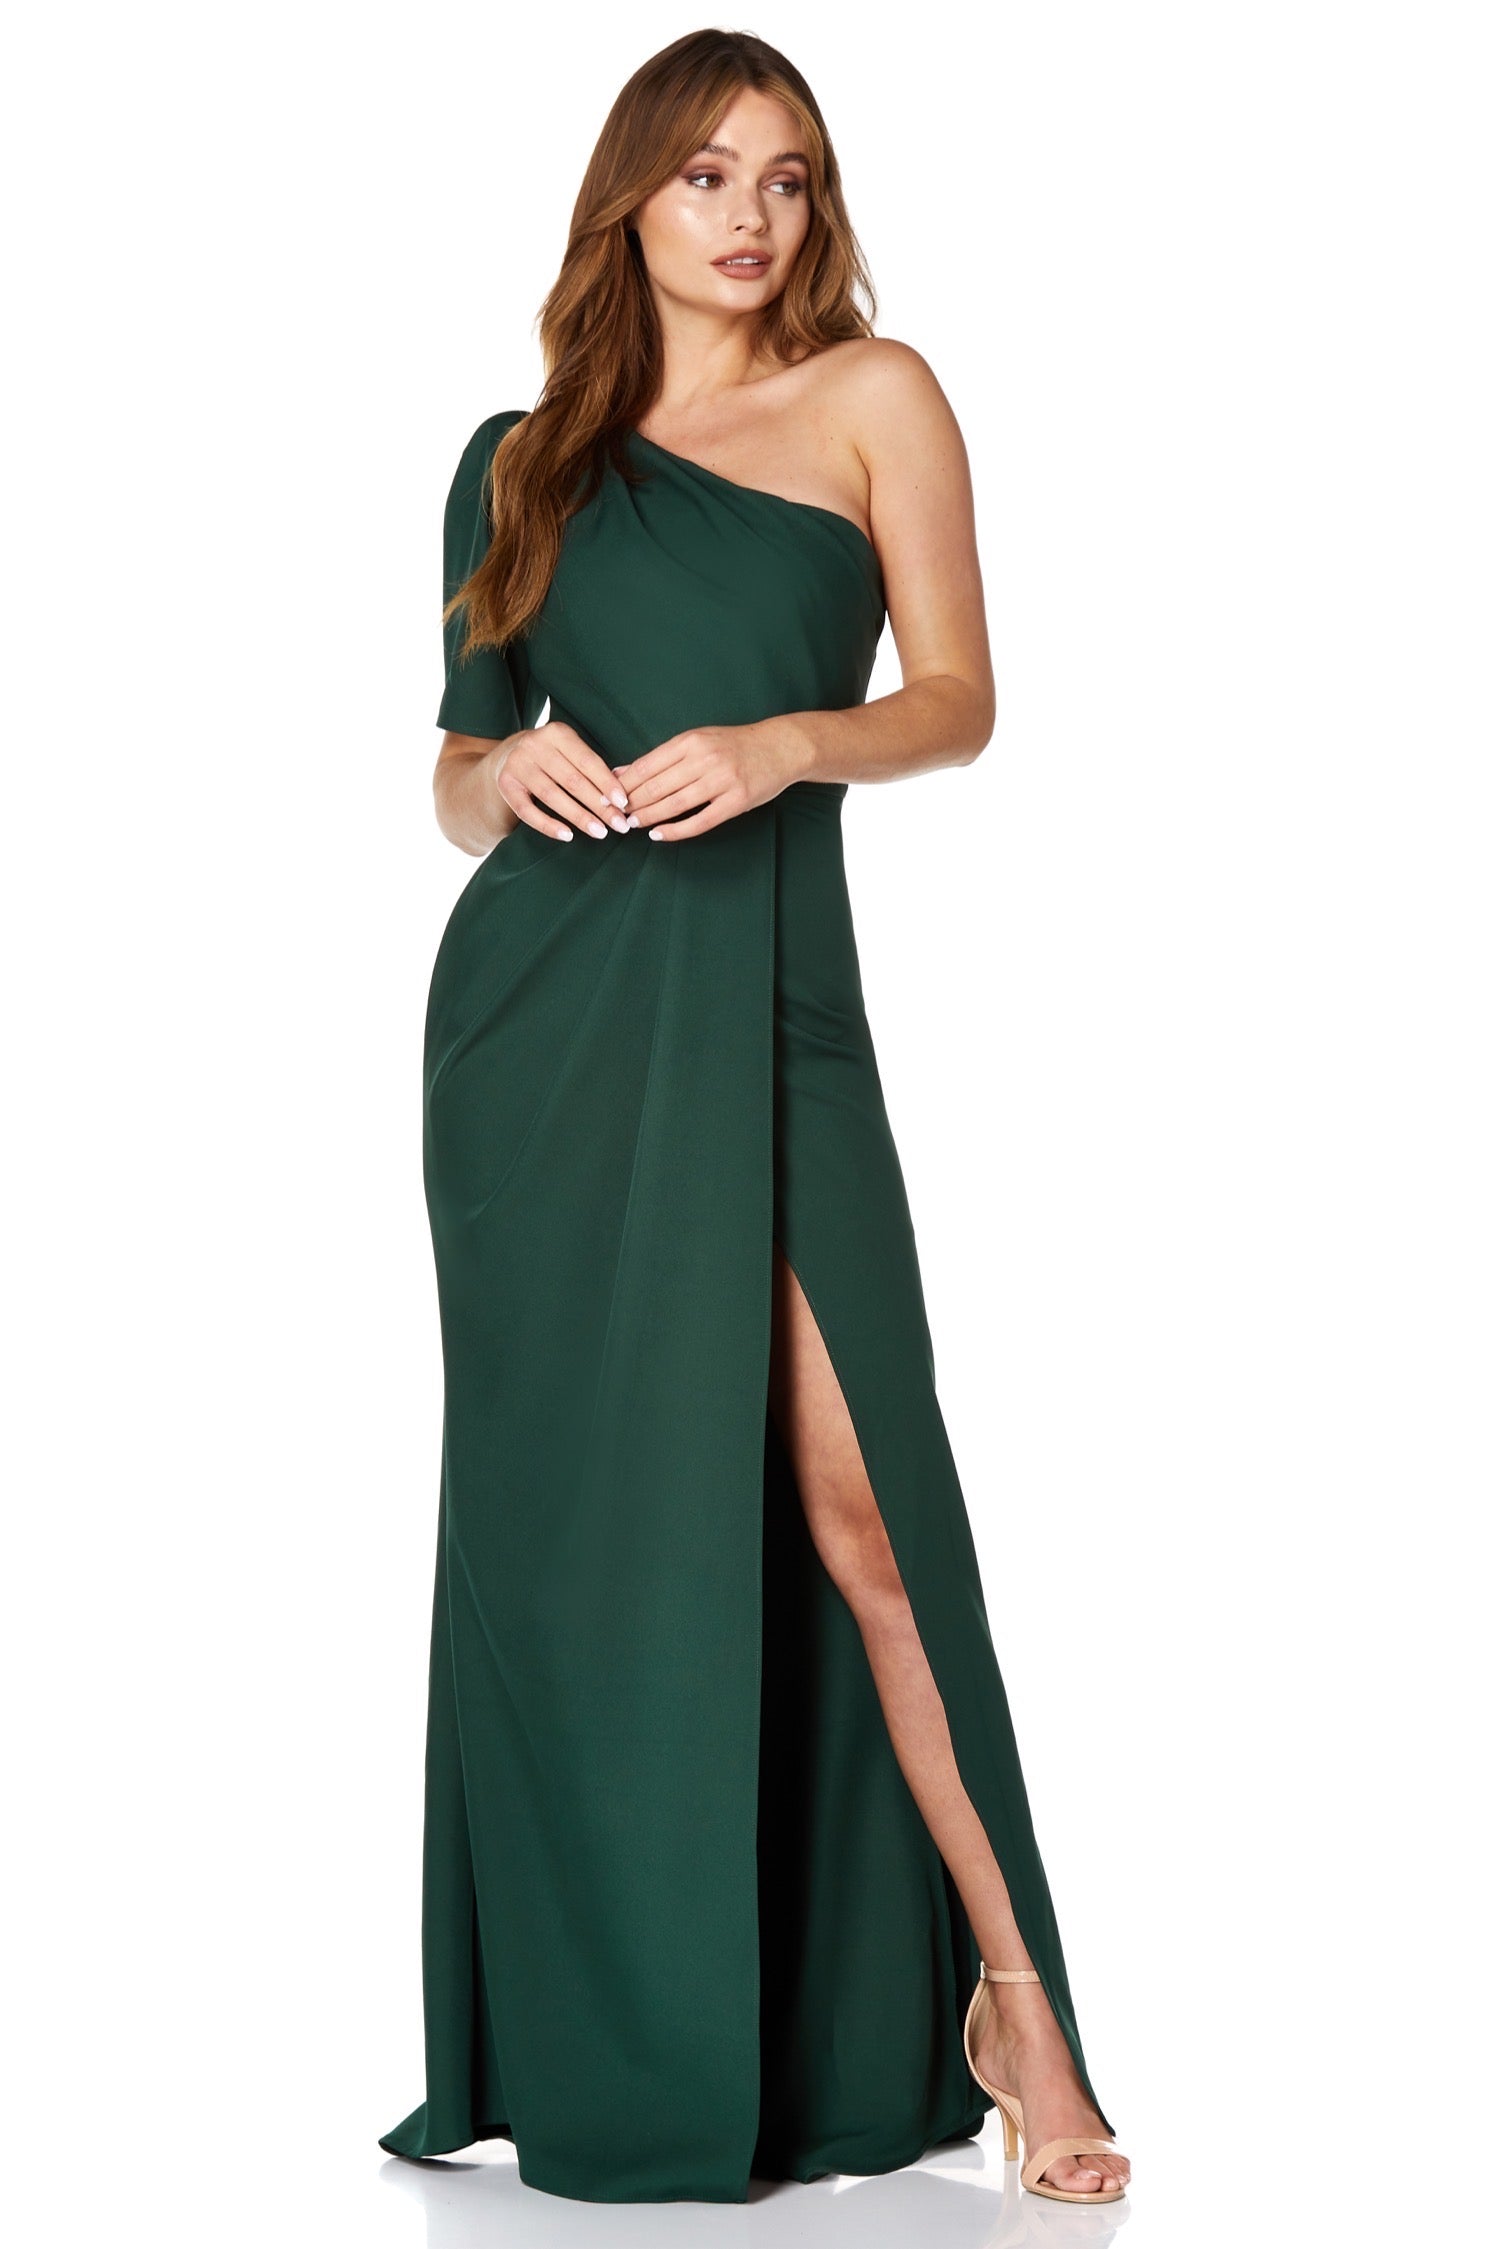 Gianna One Shoulder Sleeve Maxi Dress with Thigh Split, UK 12 / US 8 / EU 40 / Dark Green